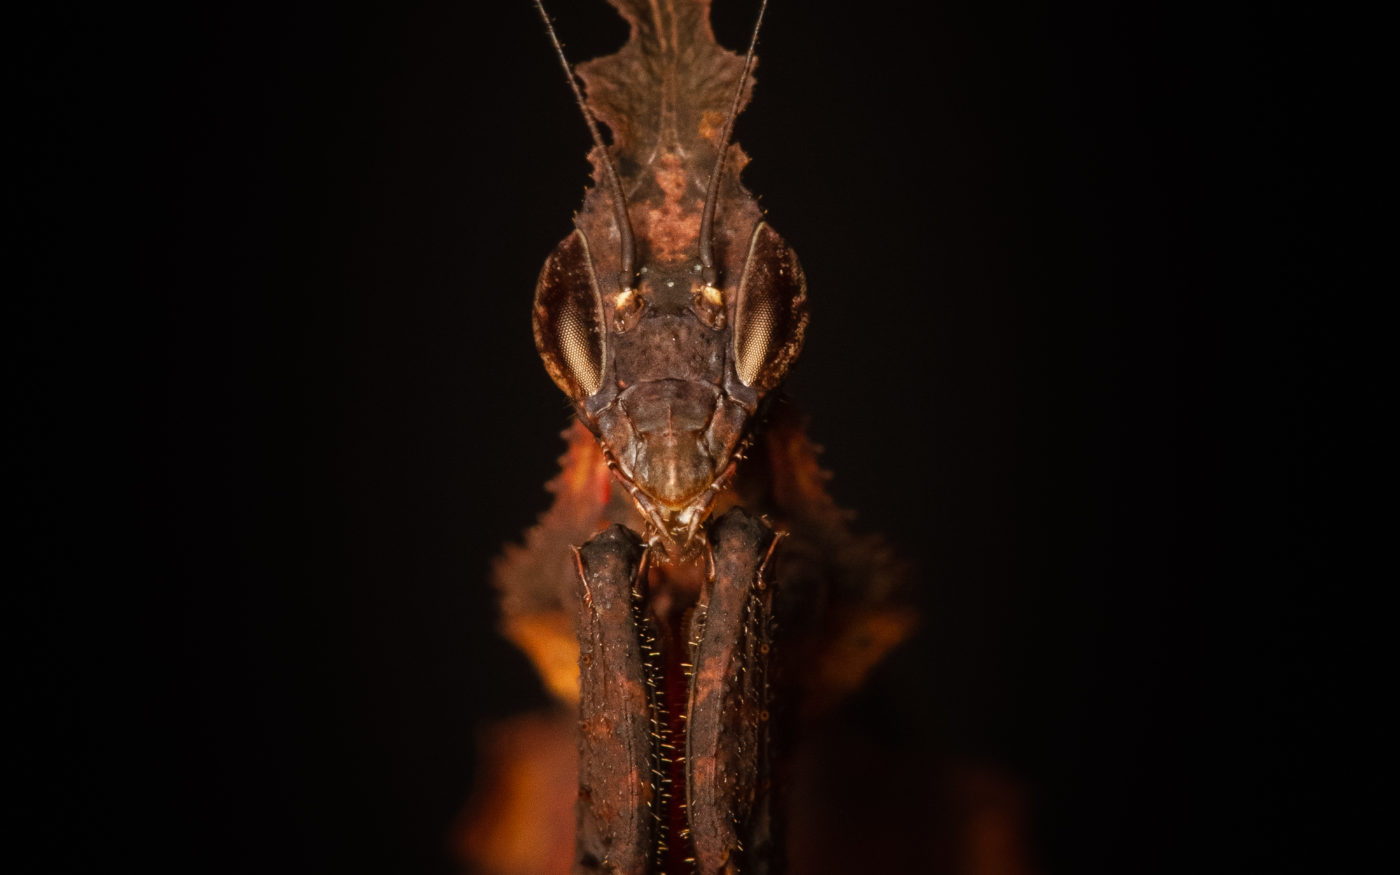 Ghost mantis, Phyllocrania paradoxa